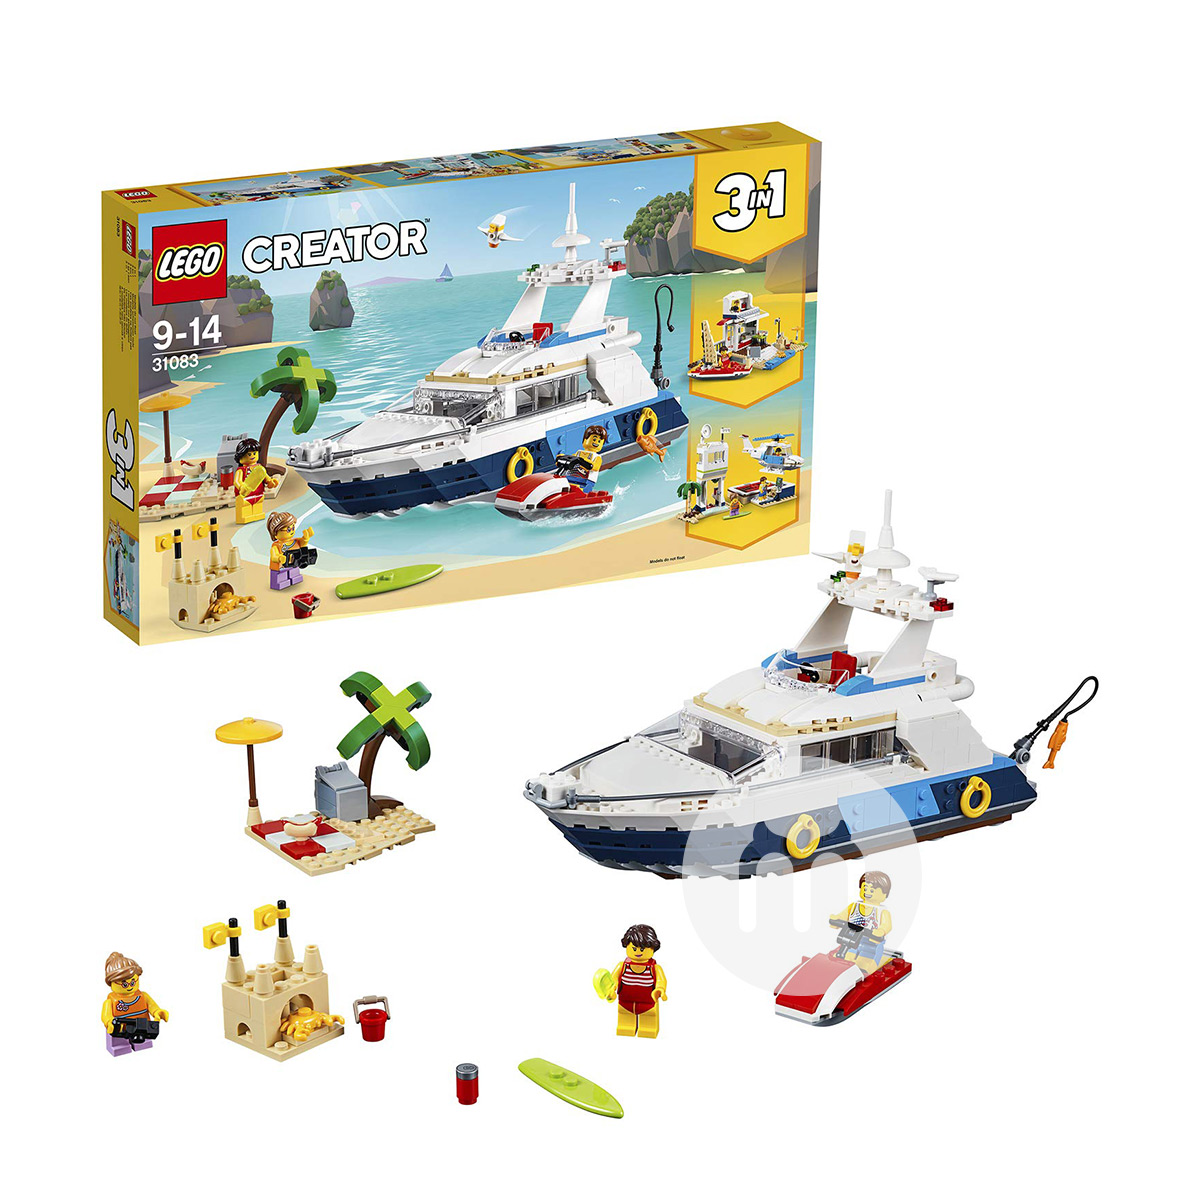 LEGO Danish creator adventure yacht...